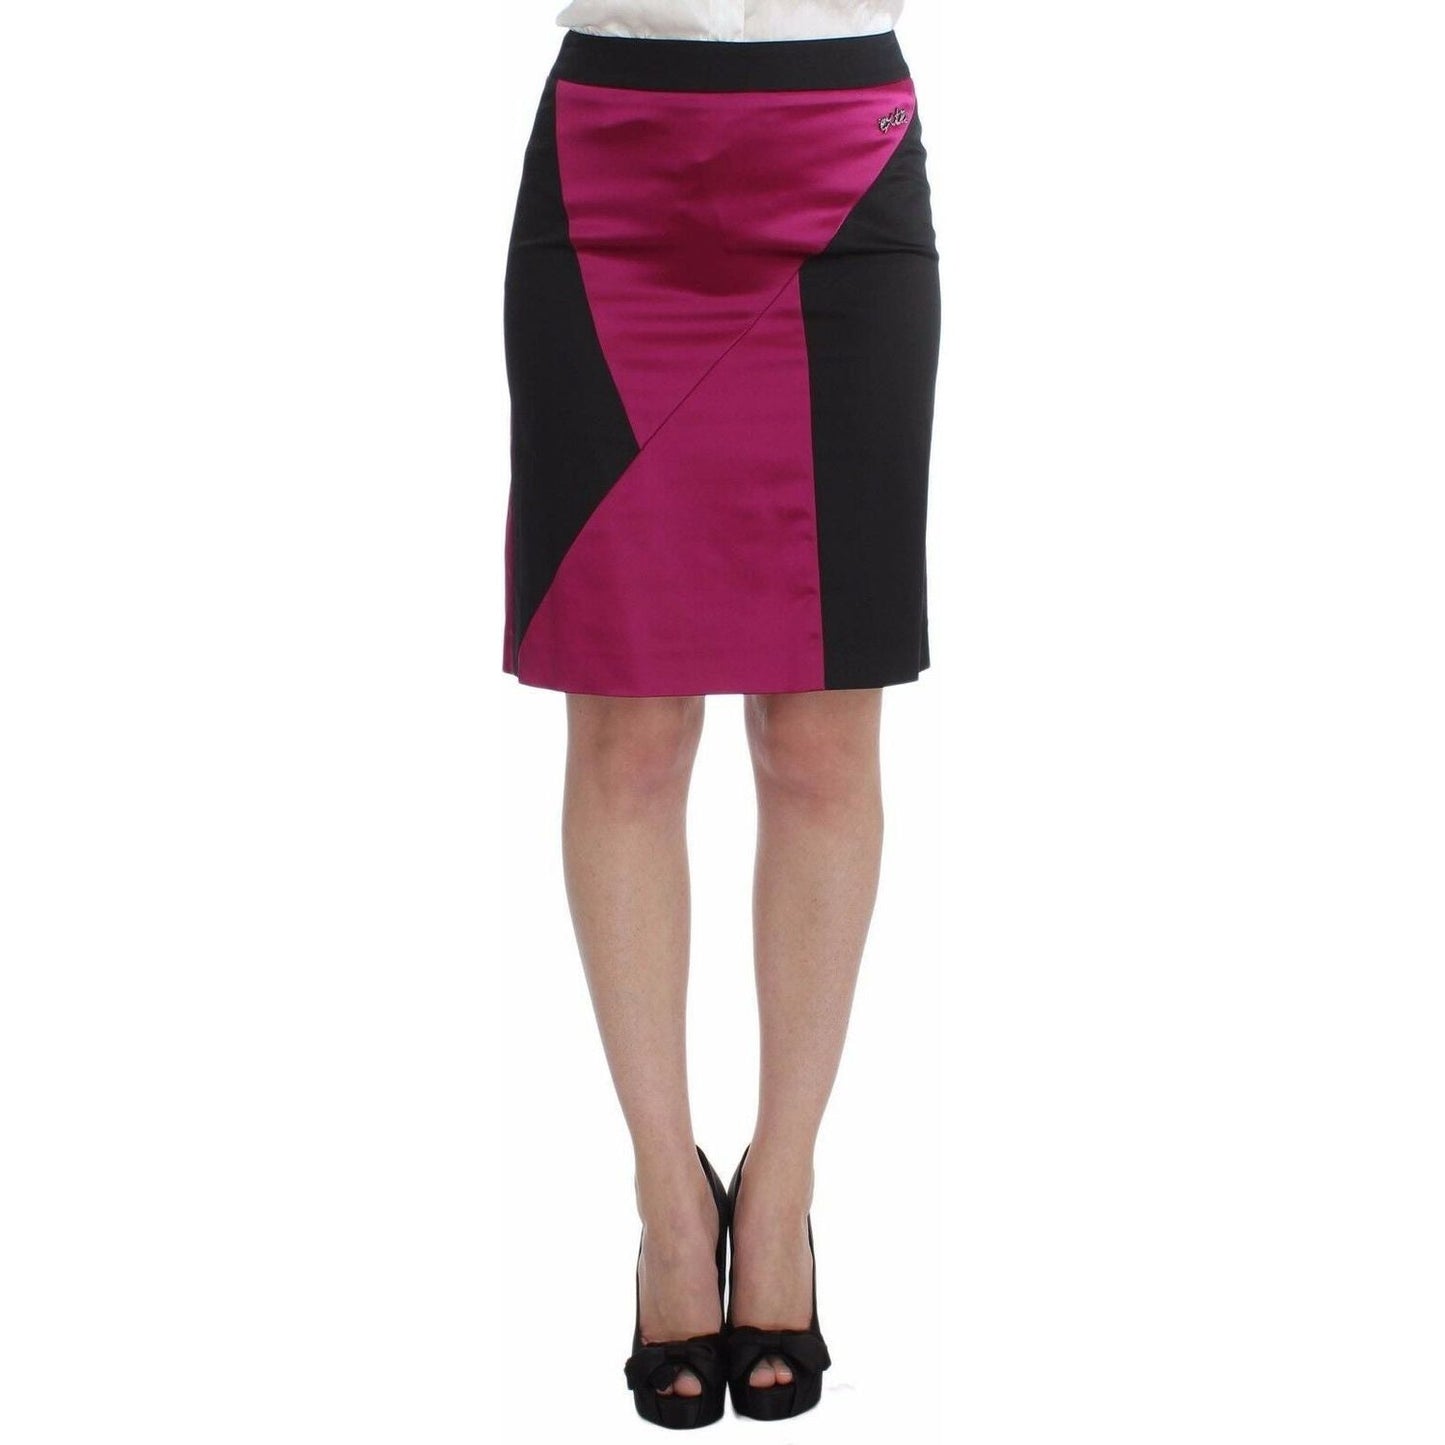 Dolce & Gabbana Elegant Pencil Skirt in Black and Pink pink-black-above-knees-cotton-stretch-skirt